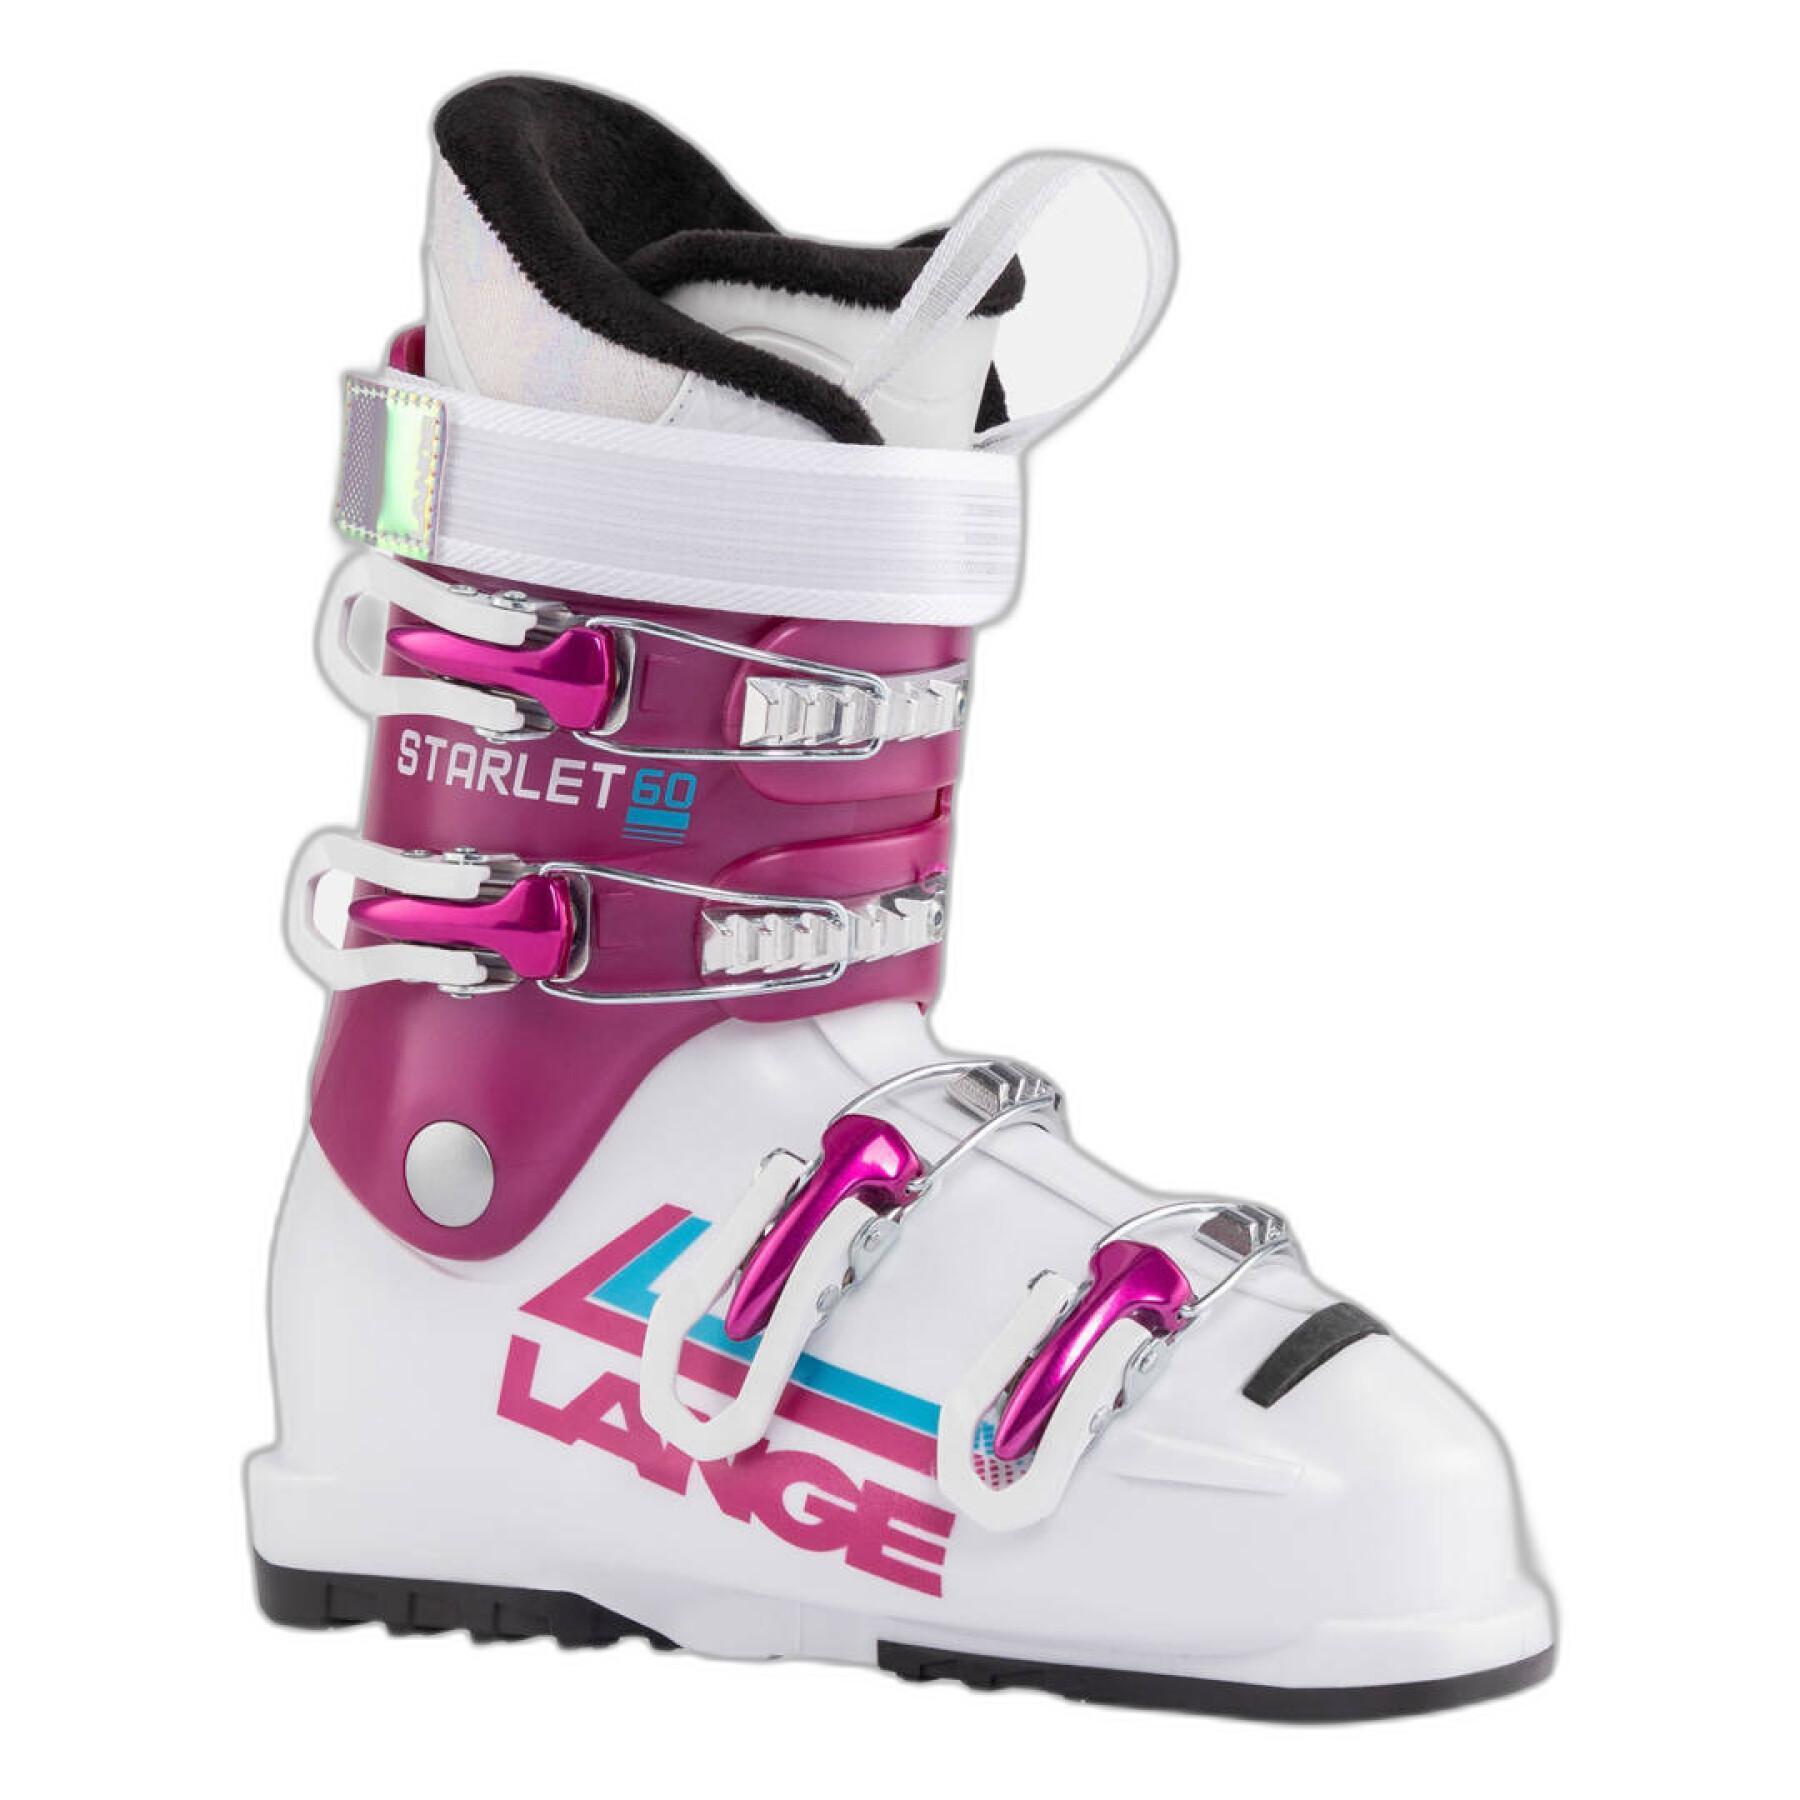 Children's ski boots Lange STARLET 50